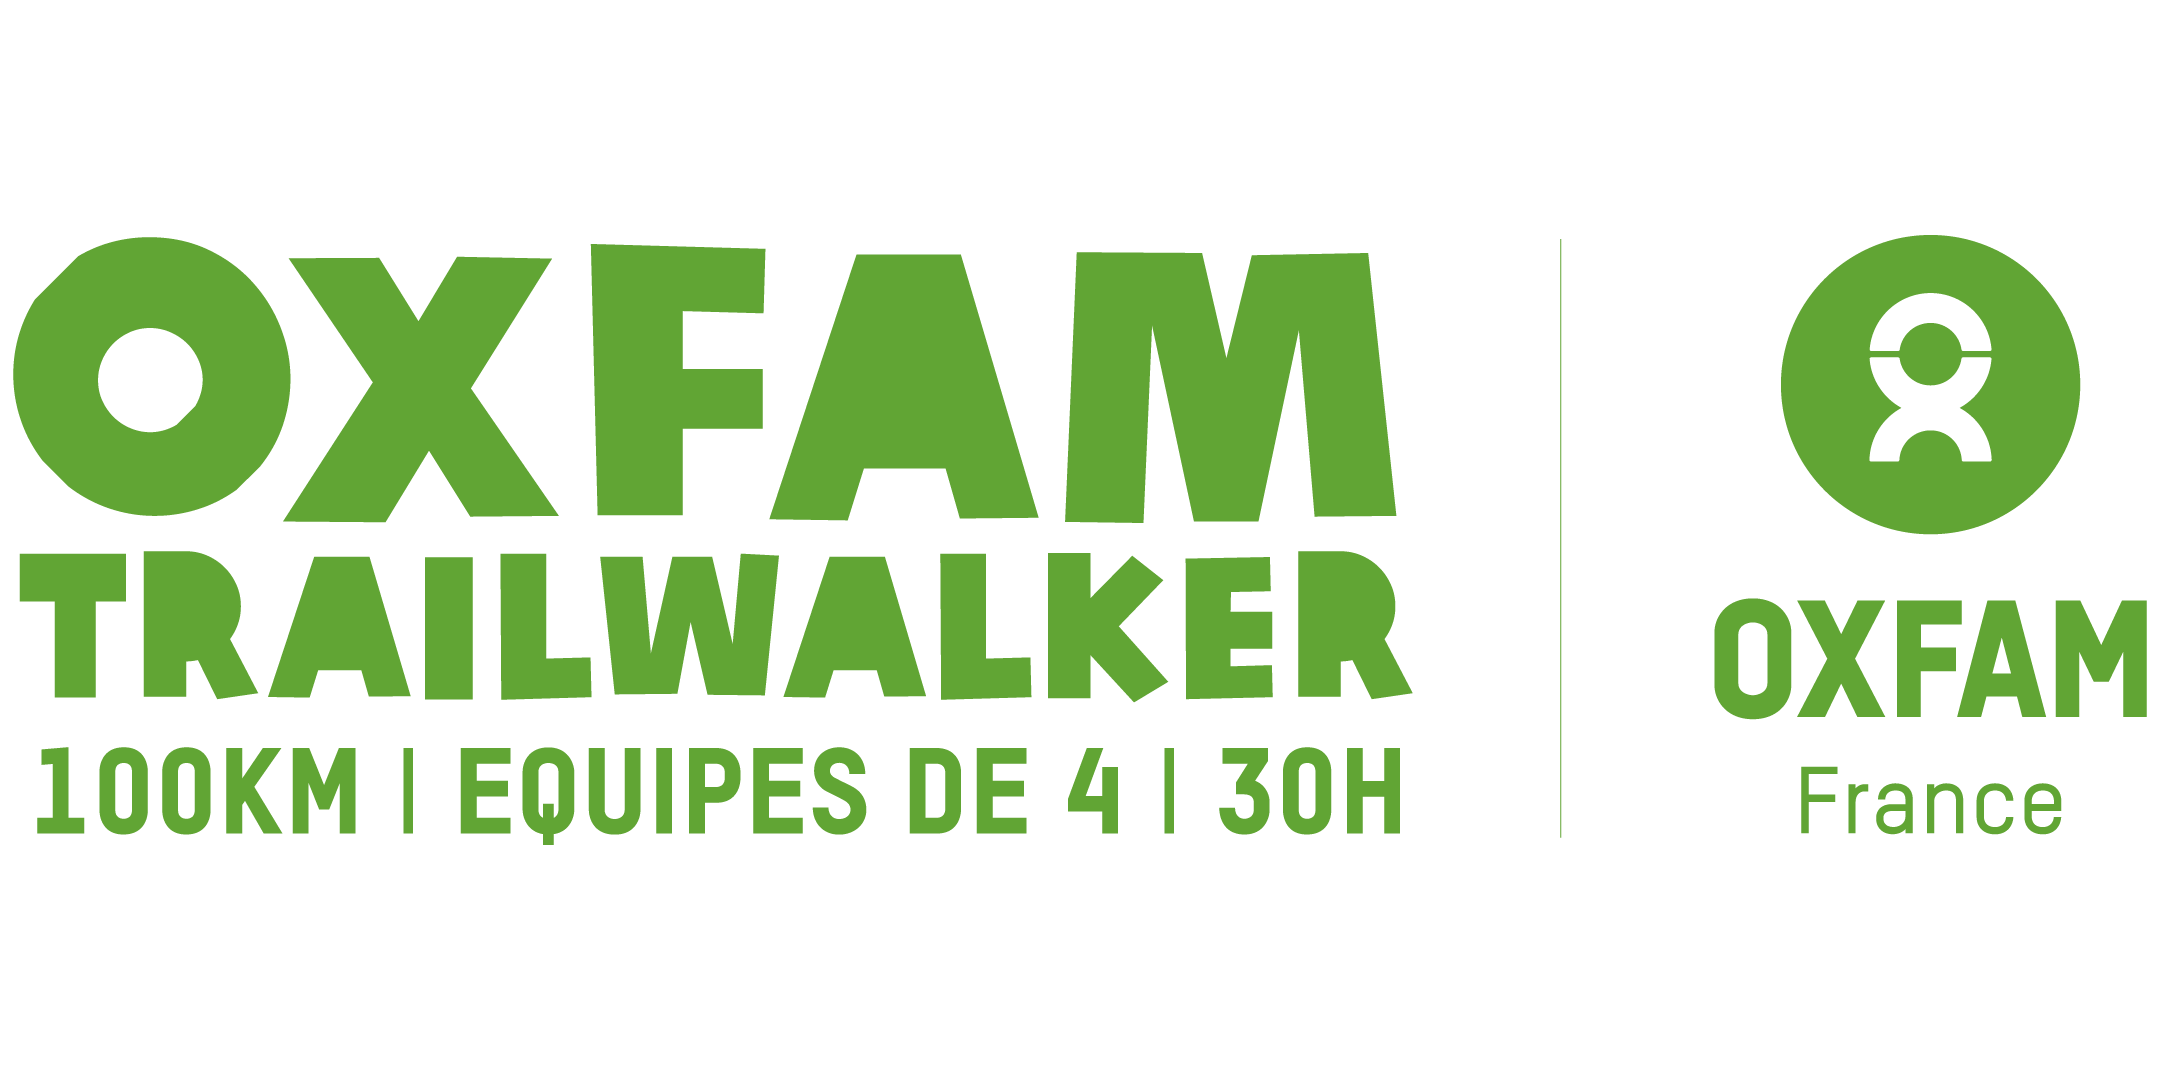 Trailwalker Oxfam 2018 / Réunion d'information n°1 - Equipes 